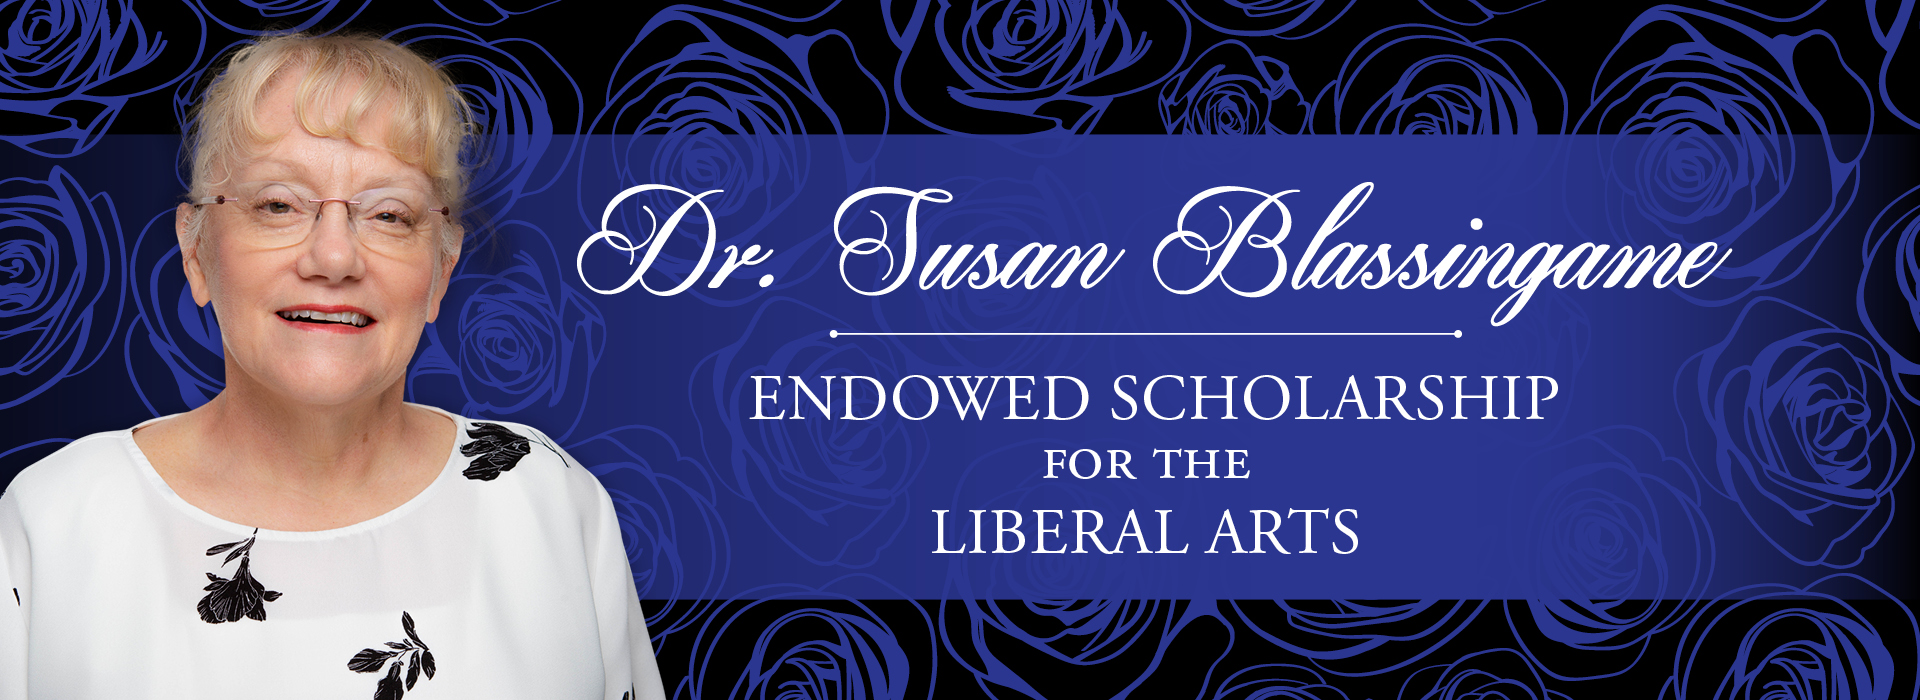 Dr. Susan Blassingame Endowed Scholarship for the Liberal Arts